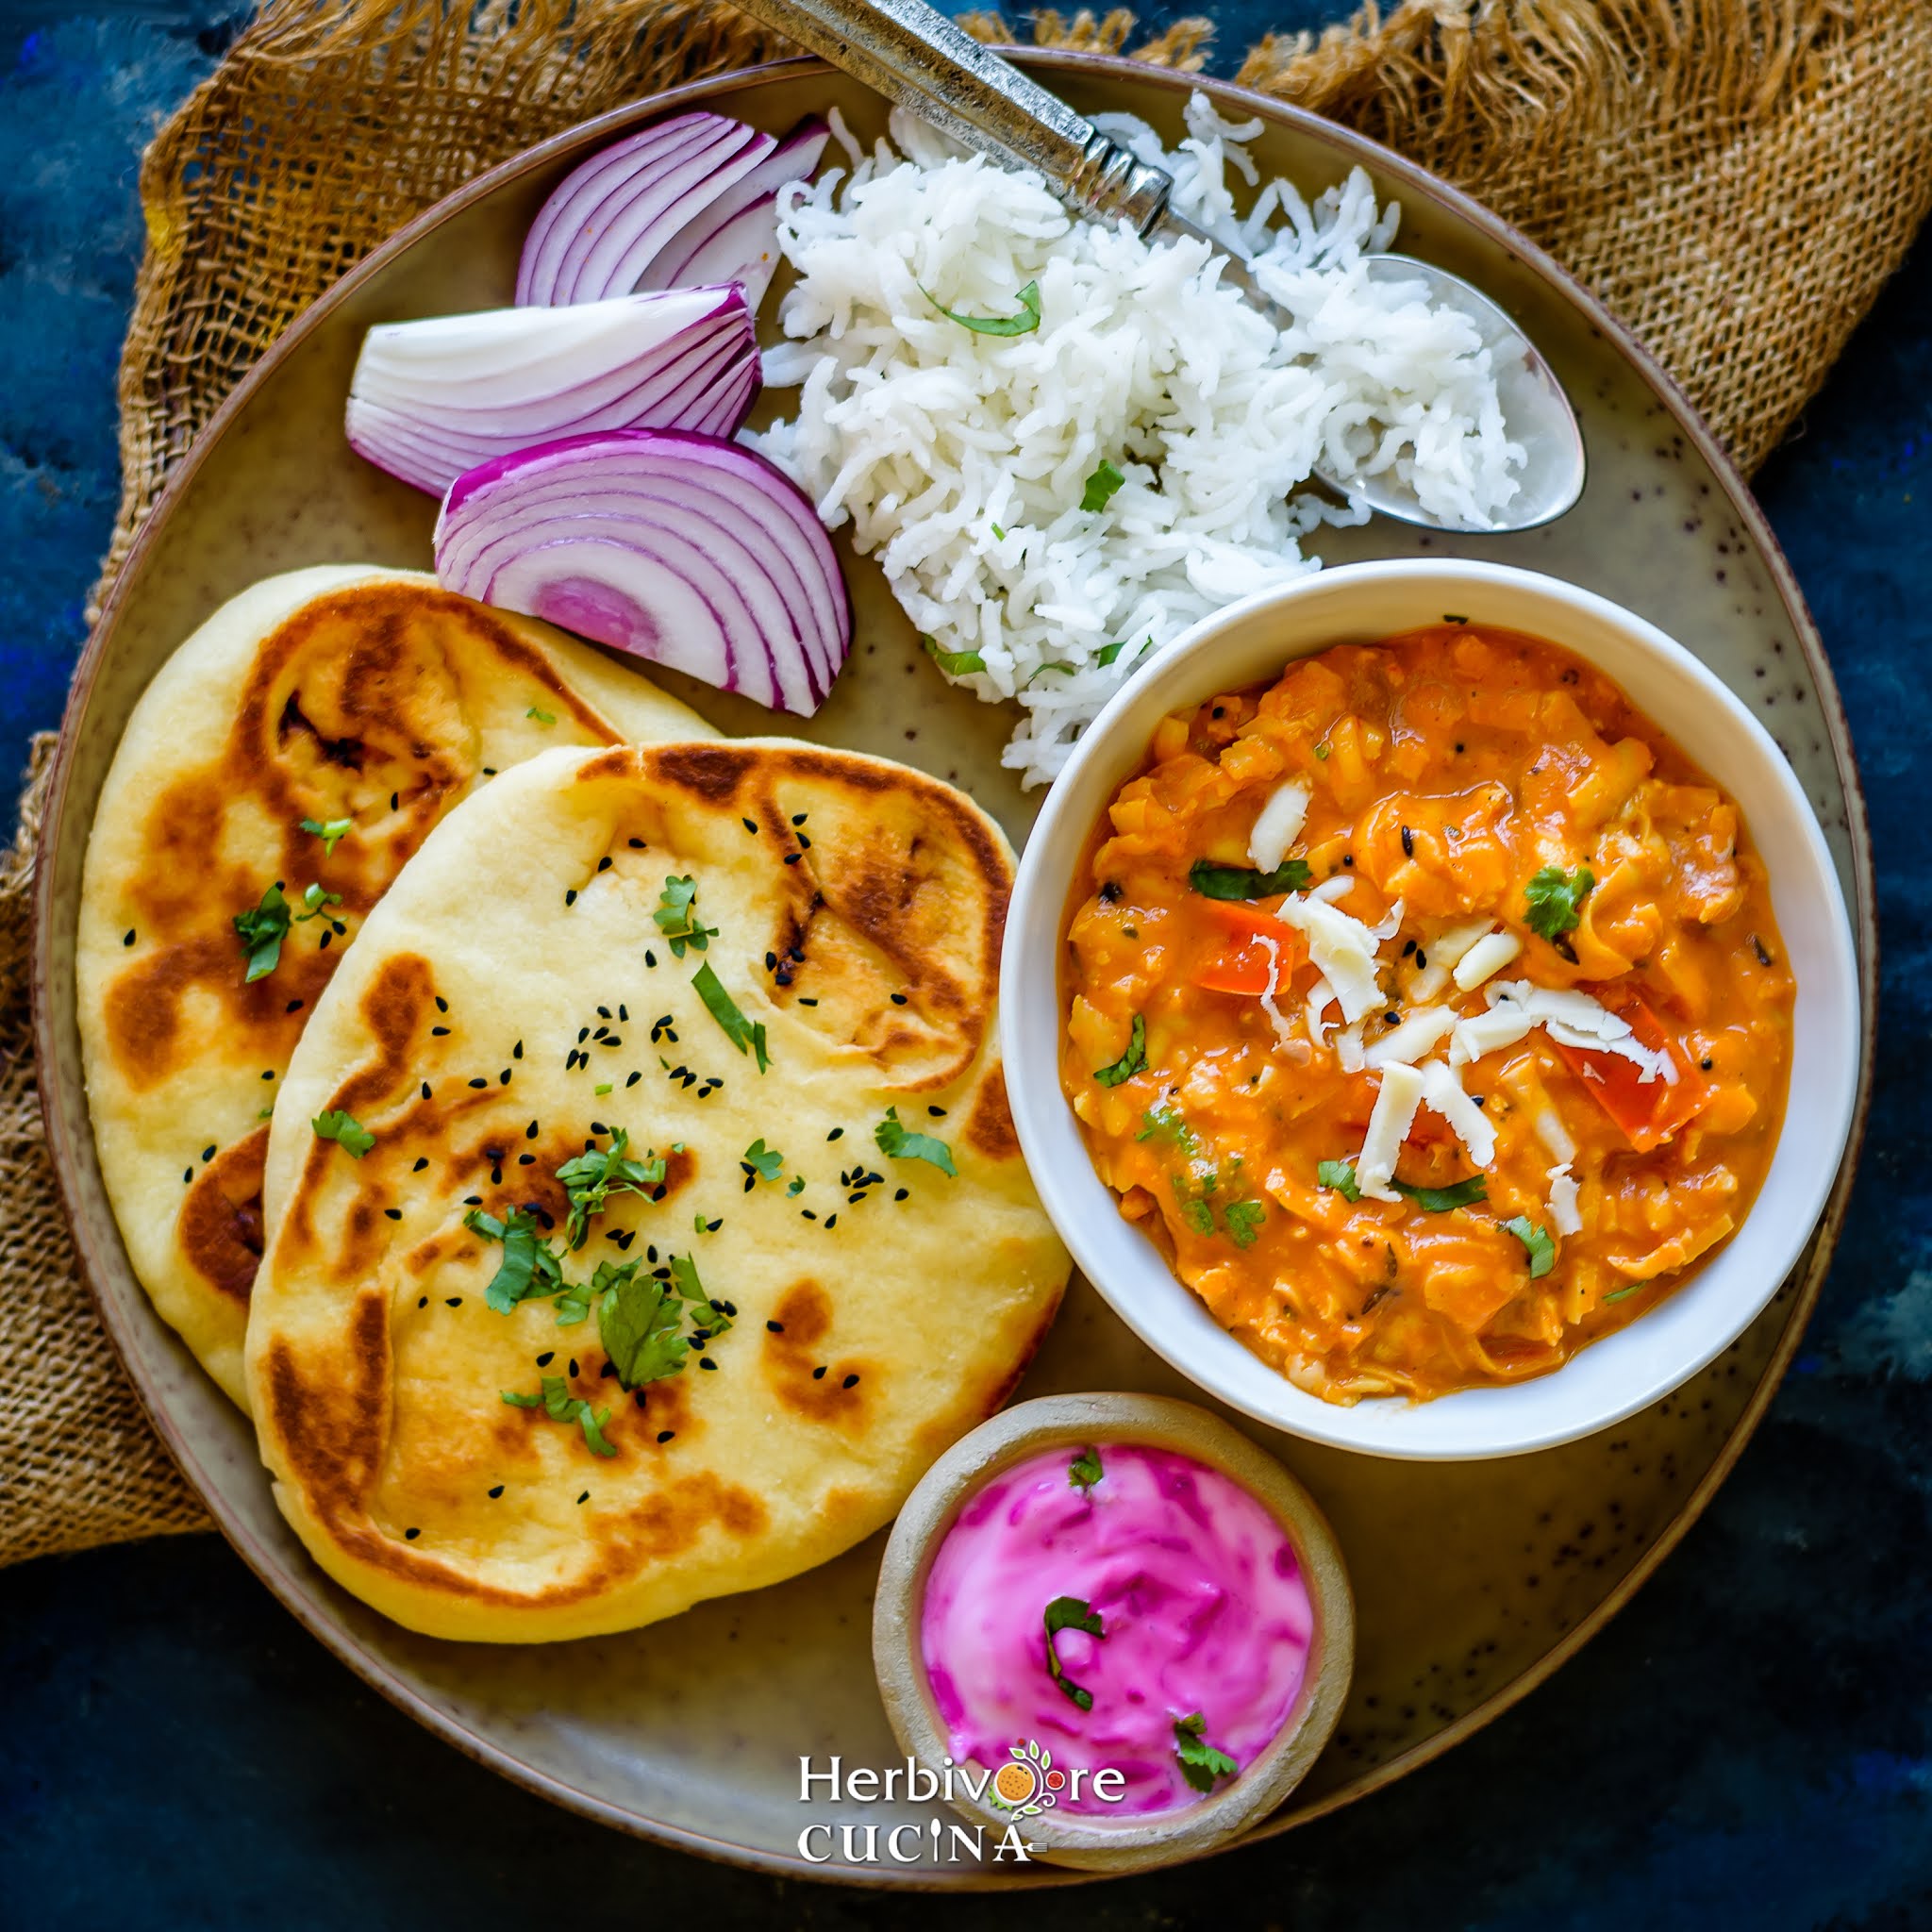 Indian Thali-naan, paneer akbari, rice, salad and raita